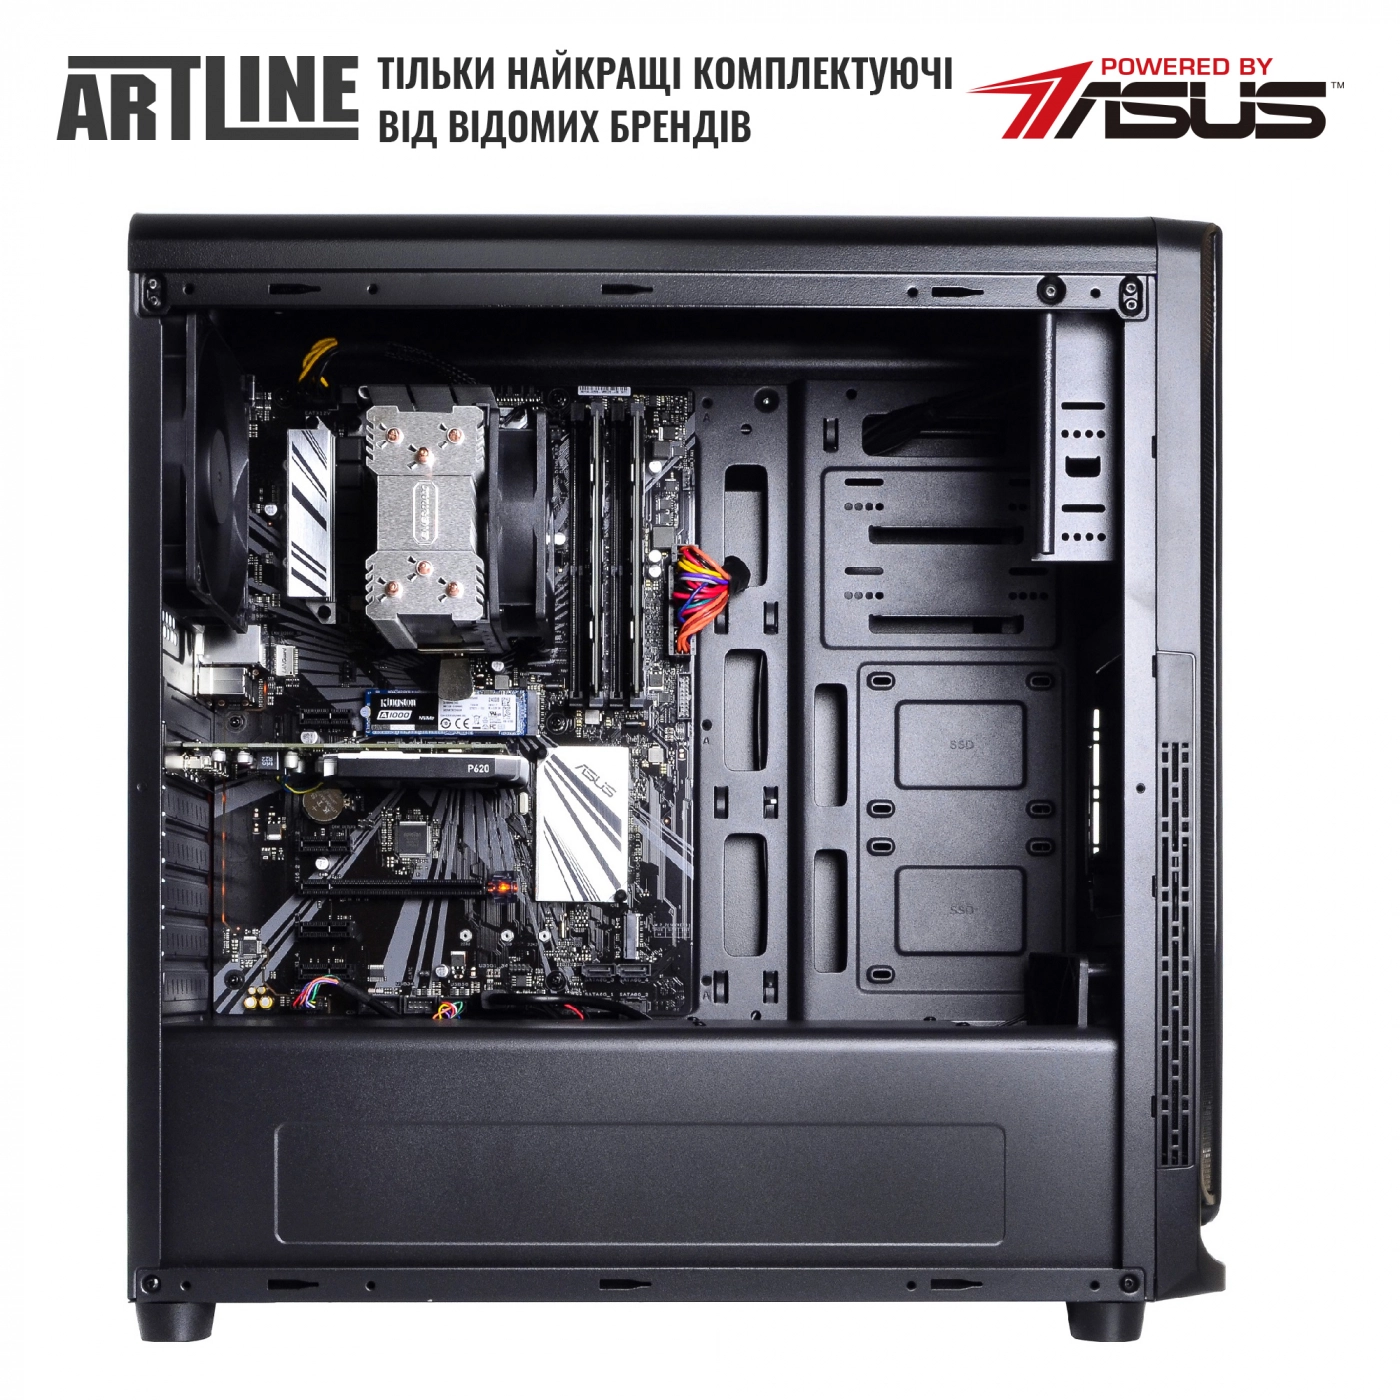 Купити Сервер ARTLINE Business T27v15 - фото 10